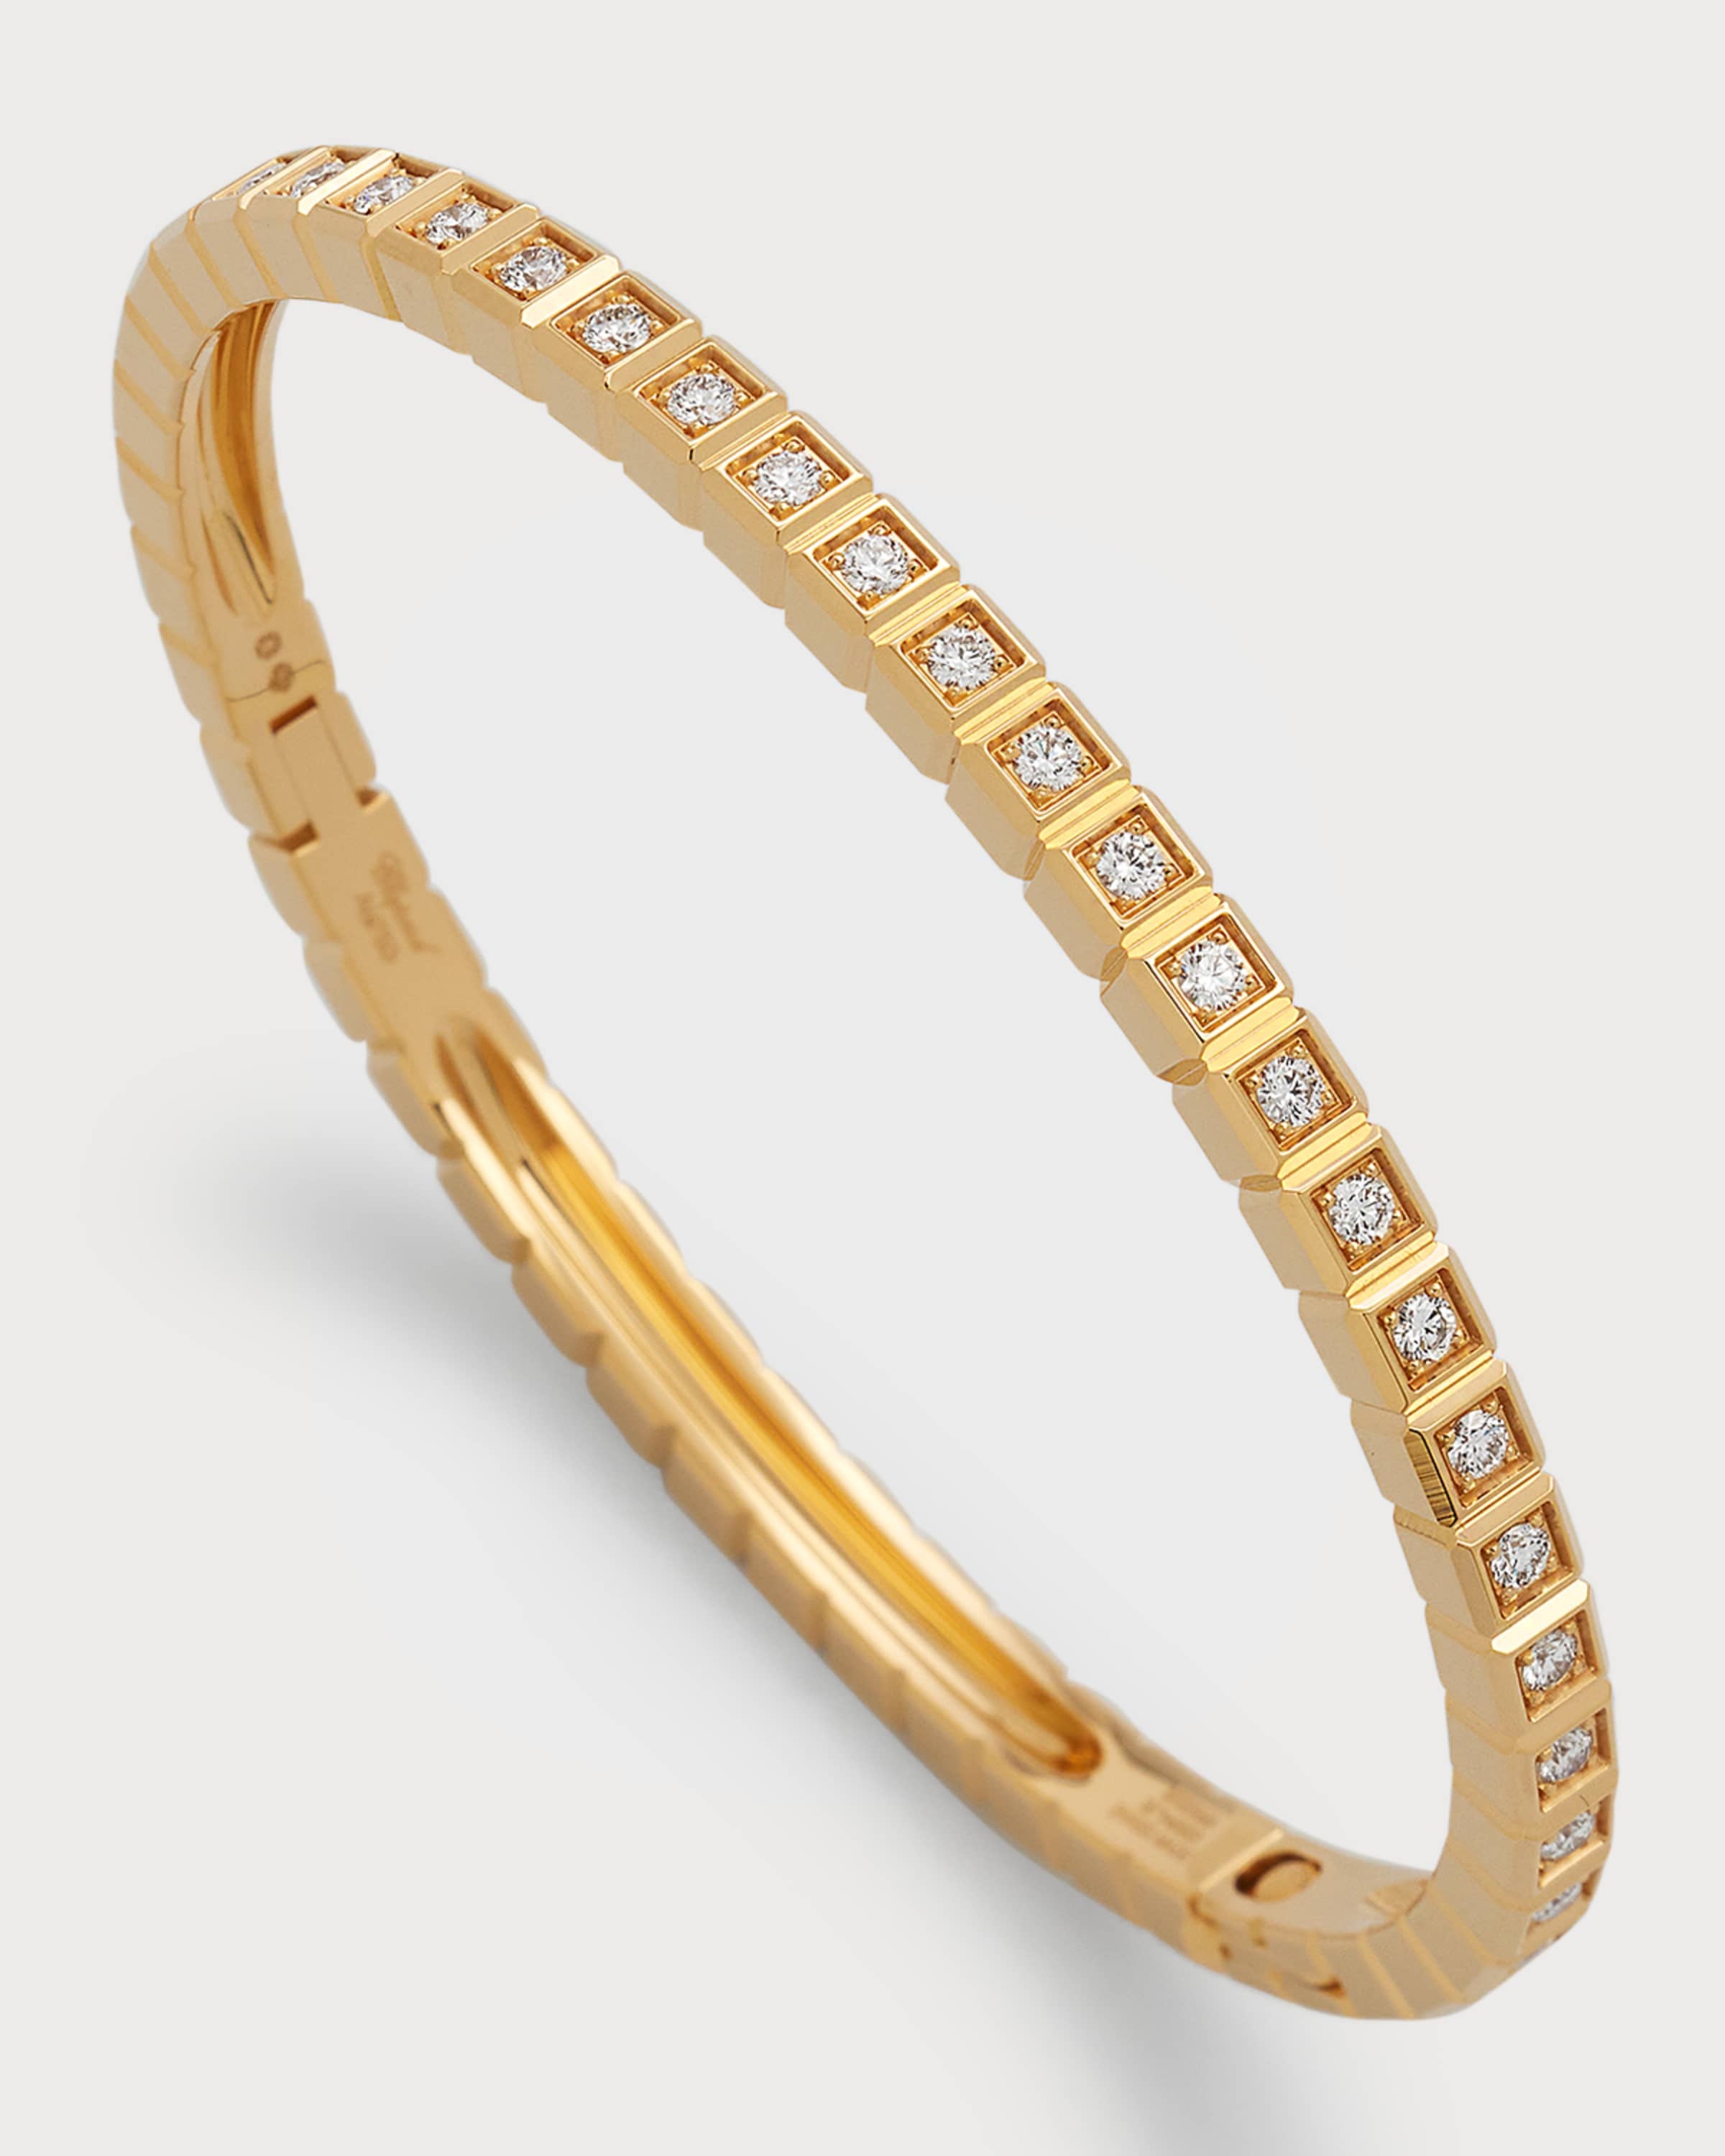 Ice Cube 18K Yellow Gold Diamond Bracelet, Size Medium - 4